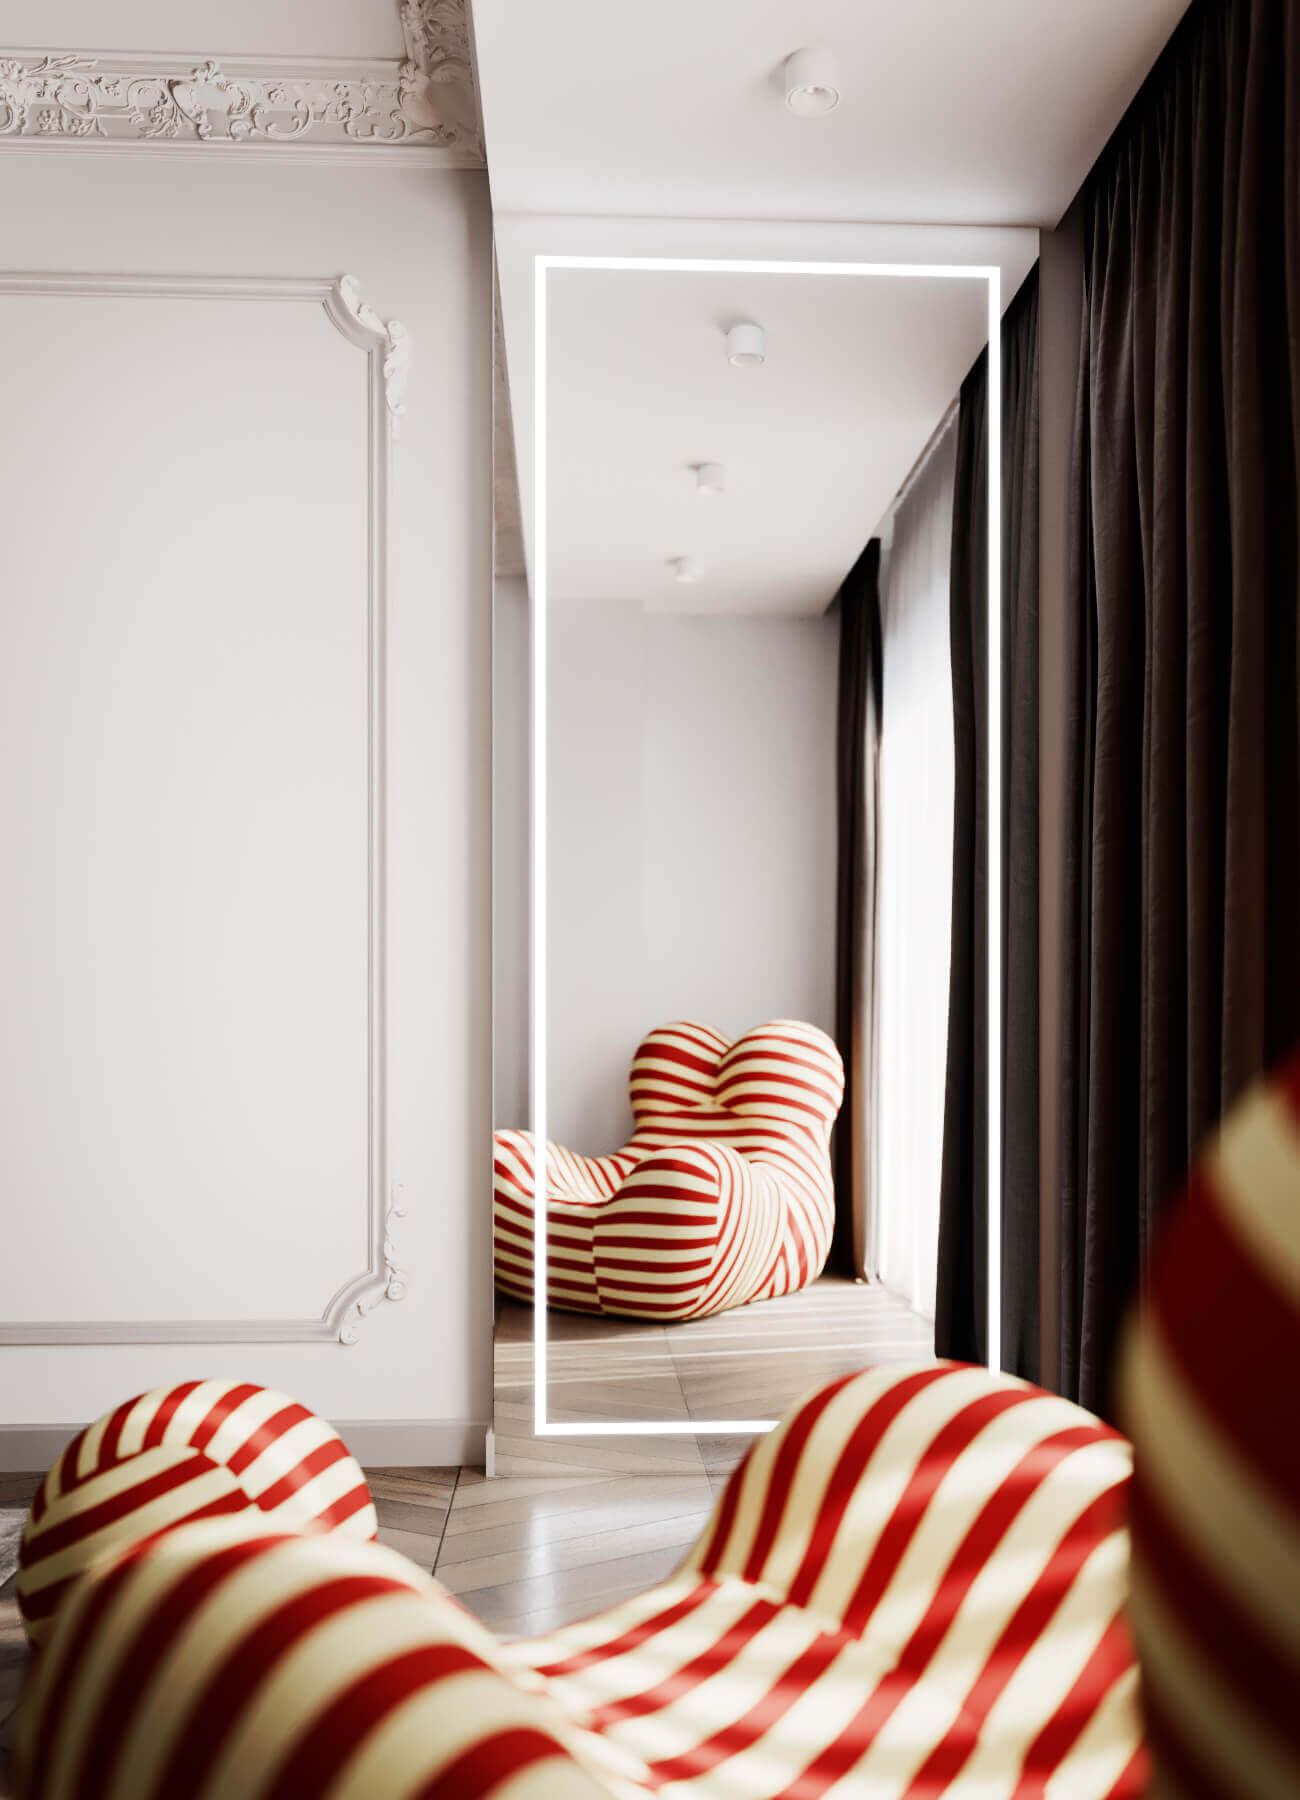 Bernardazzi Apartment bedroom design mirror led light - cgi visualization